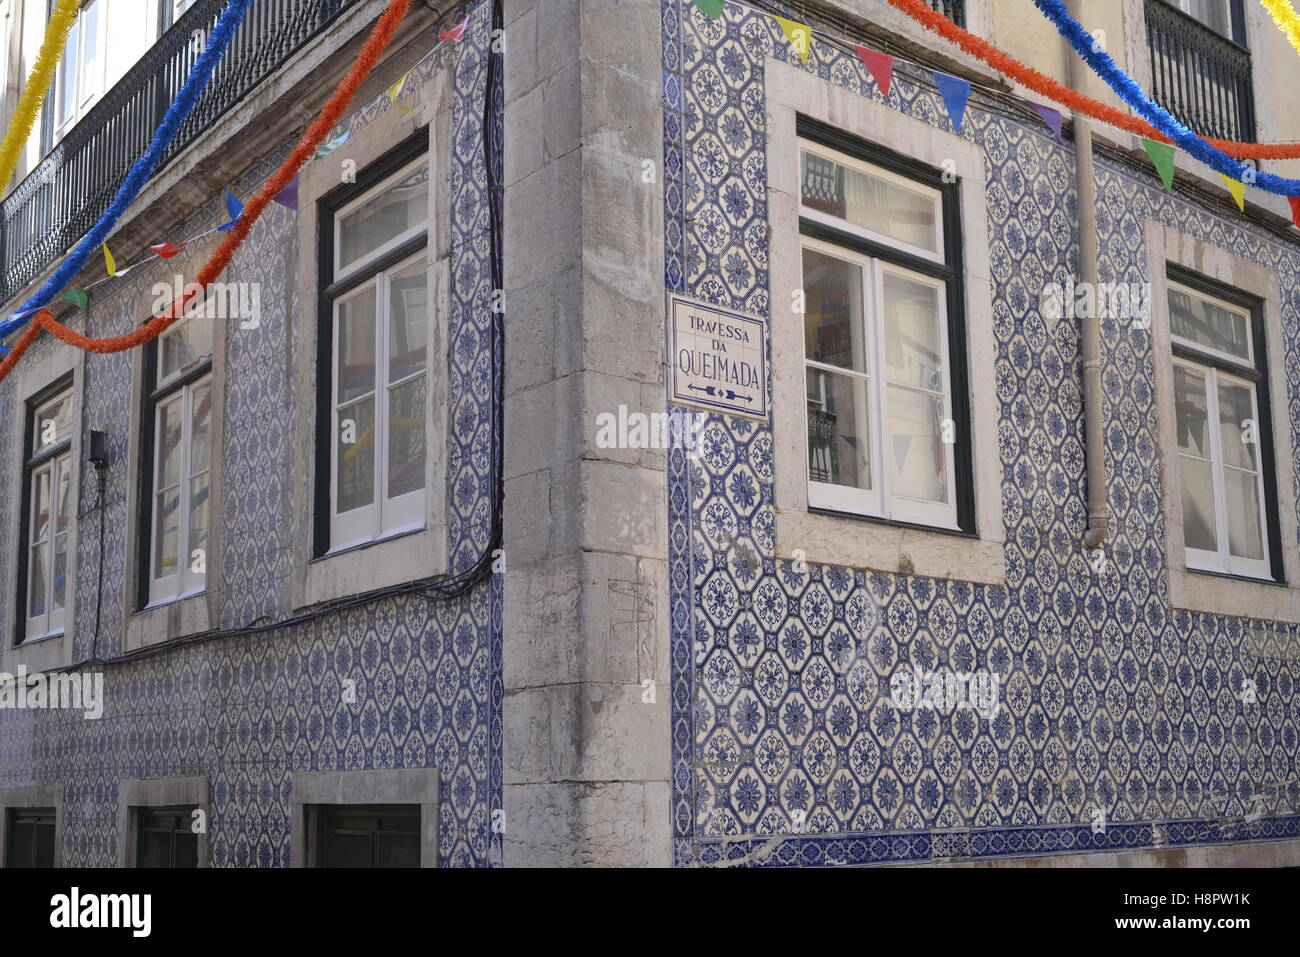 Traditional Portuguese tiles in Bairro Alto Lisbon, Portugal Stock Photo